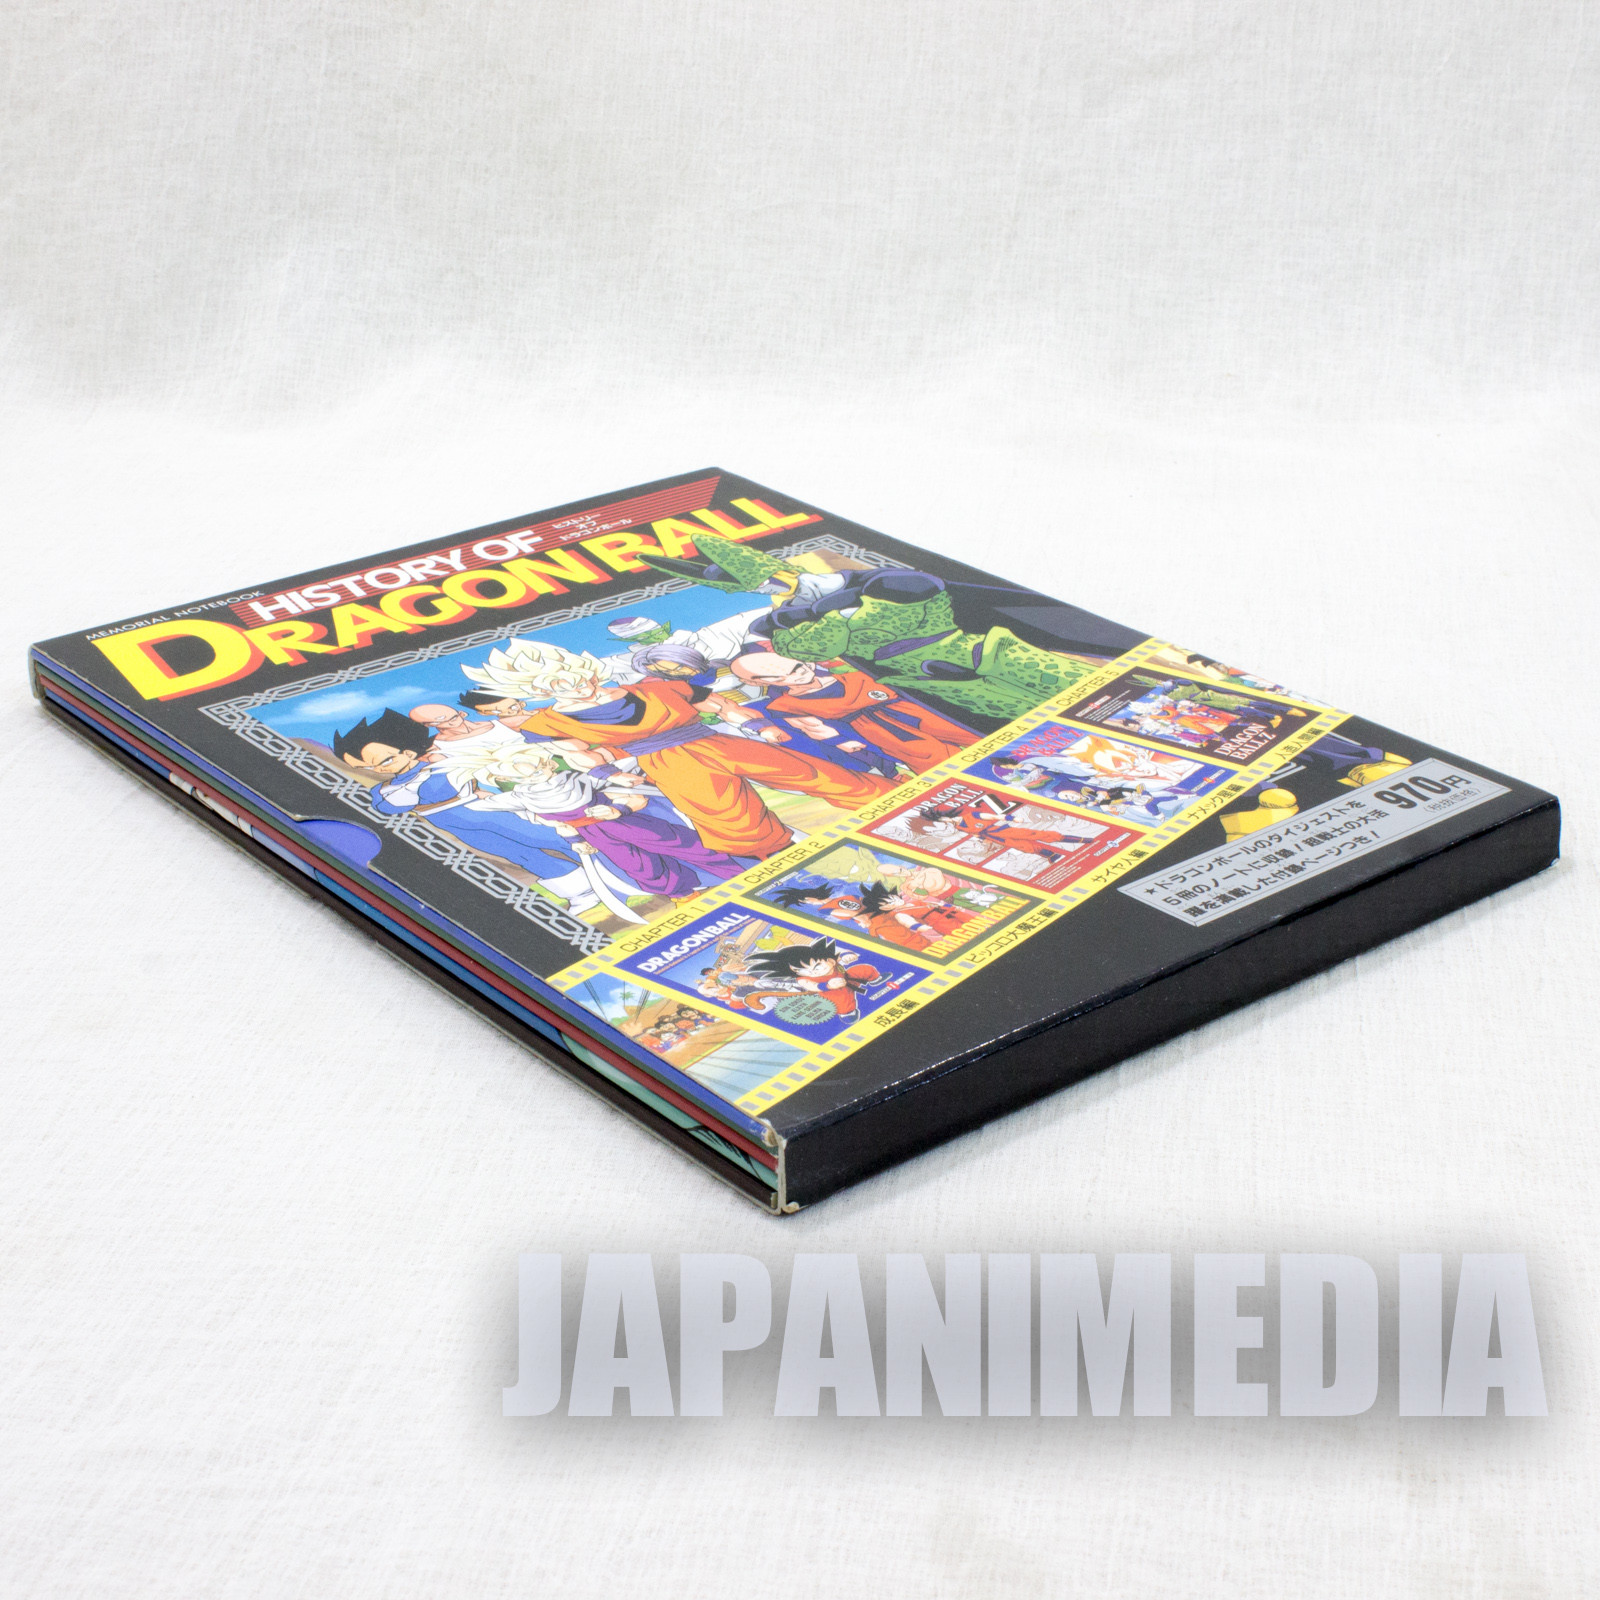 Retro Rare! Dragon Ball Z Notebook 5pc set with Case History of Dragon ball JAPAN ANIME